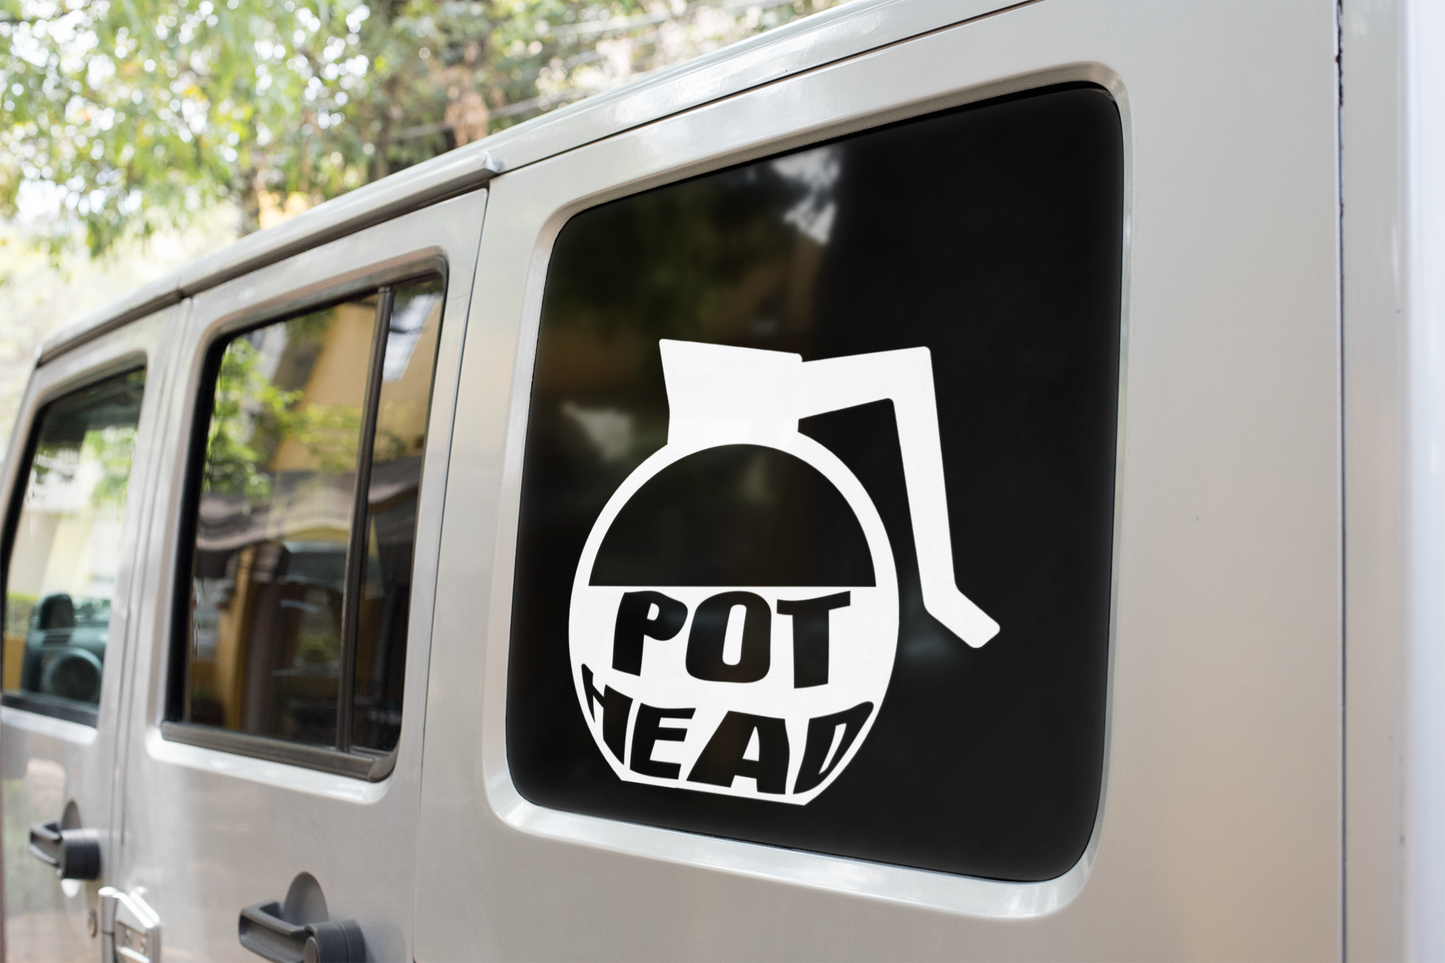 Pot Head - Vinyl sticker